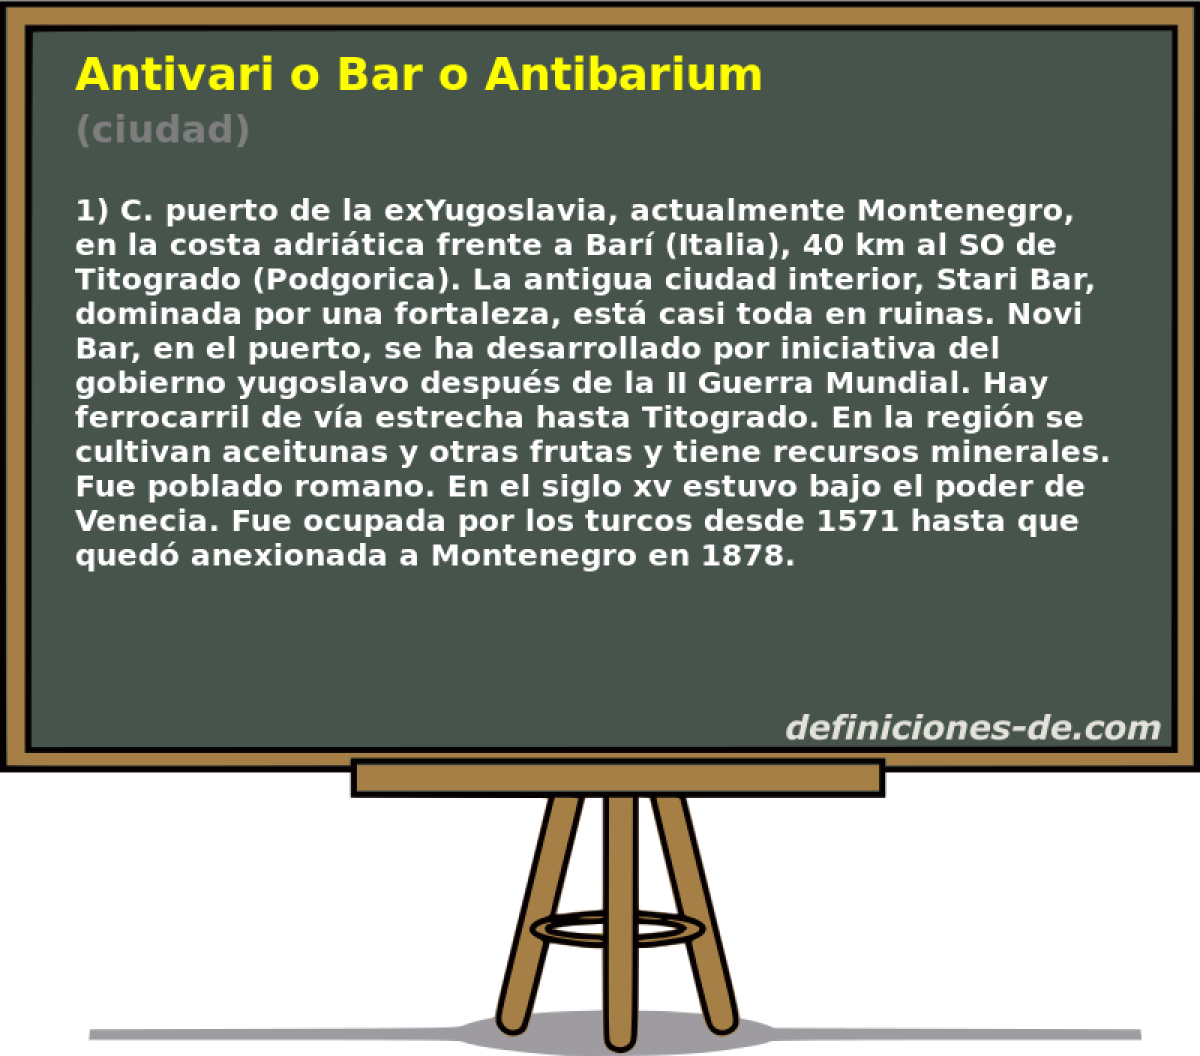 Antivari o Bar o Antibarium (ciudad)